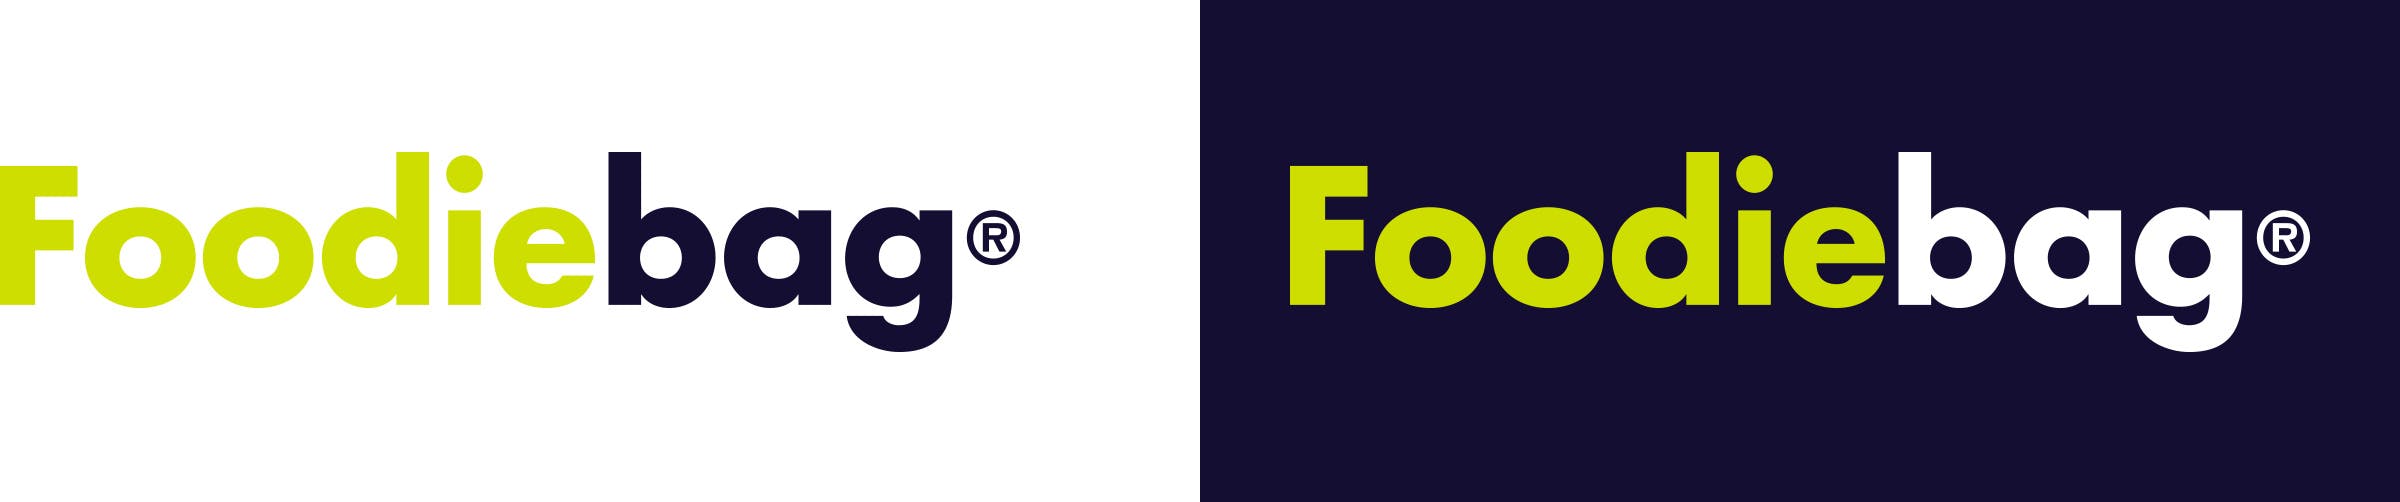 Foodiebag logotypes